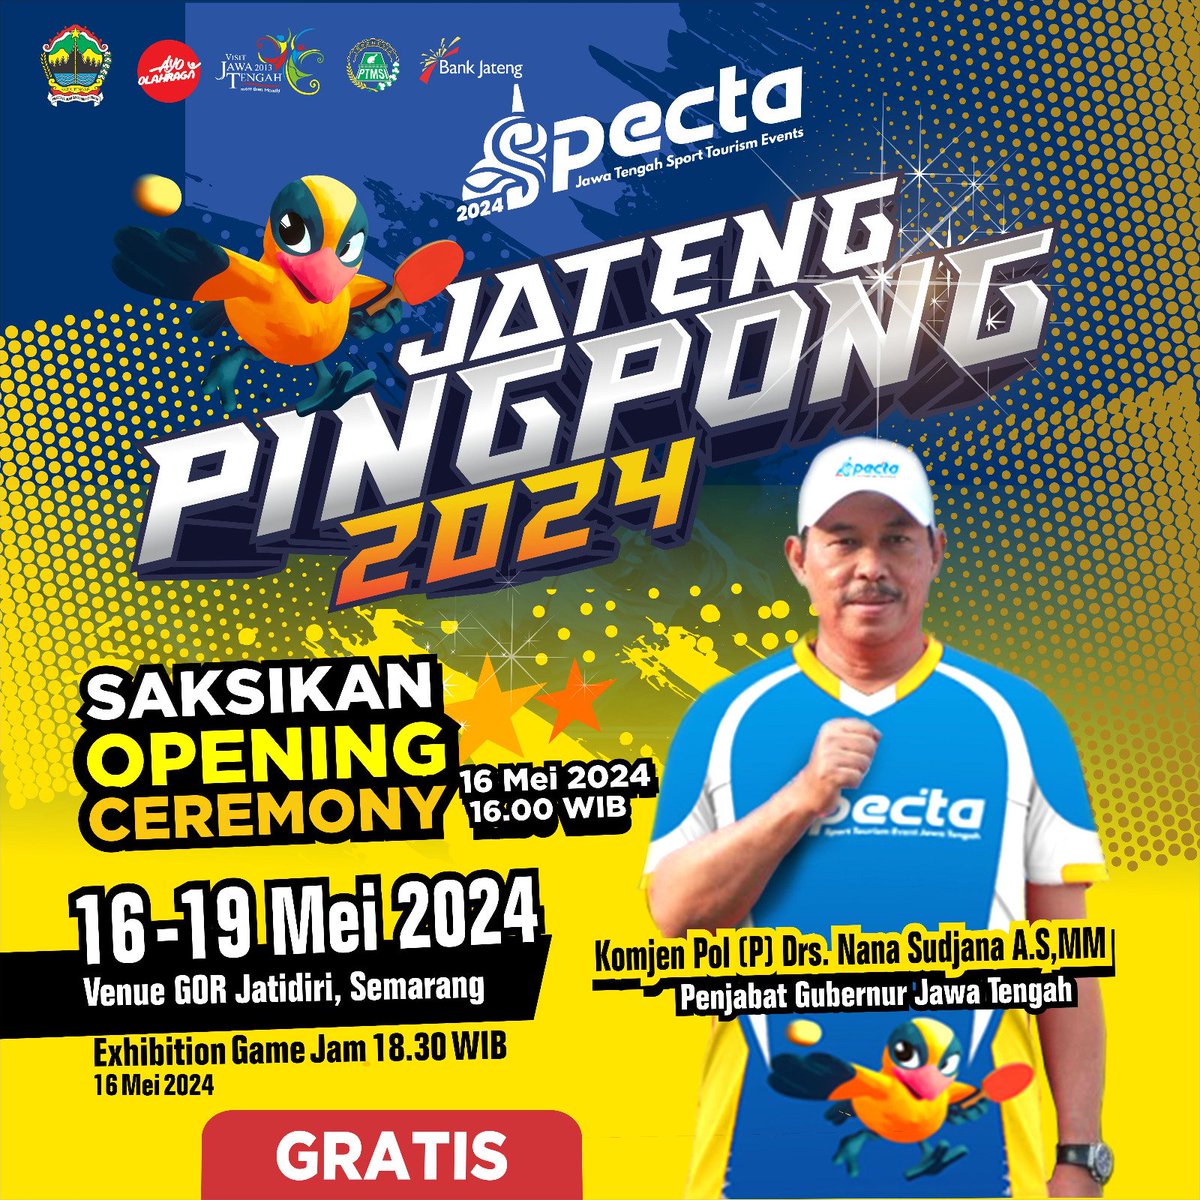 Jateng Pingpong 2024

Opening Ceremony:
🗓️ Kamis, 16 Mei 2024, 16.00 WIB
#JatengPingpong2024

#JelajahJatengSekarang
#sporttourism #DijatengAja